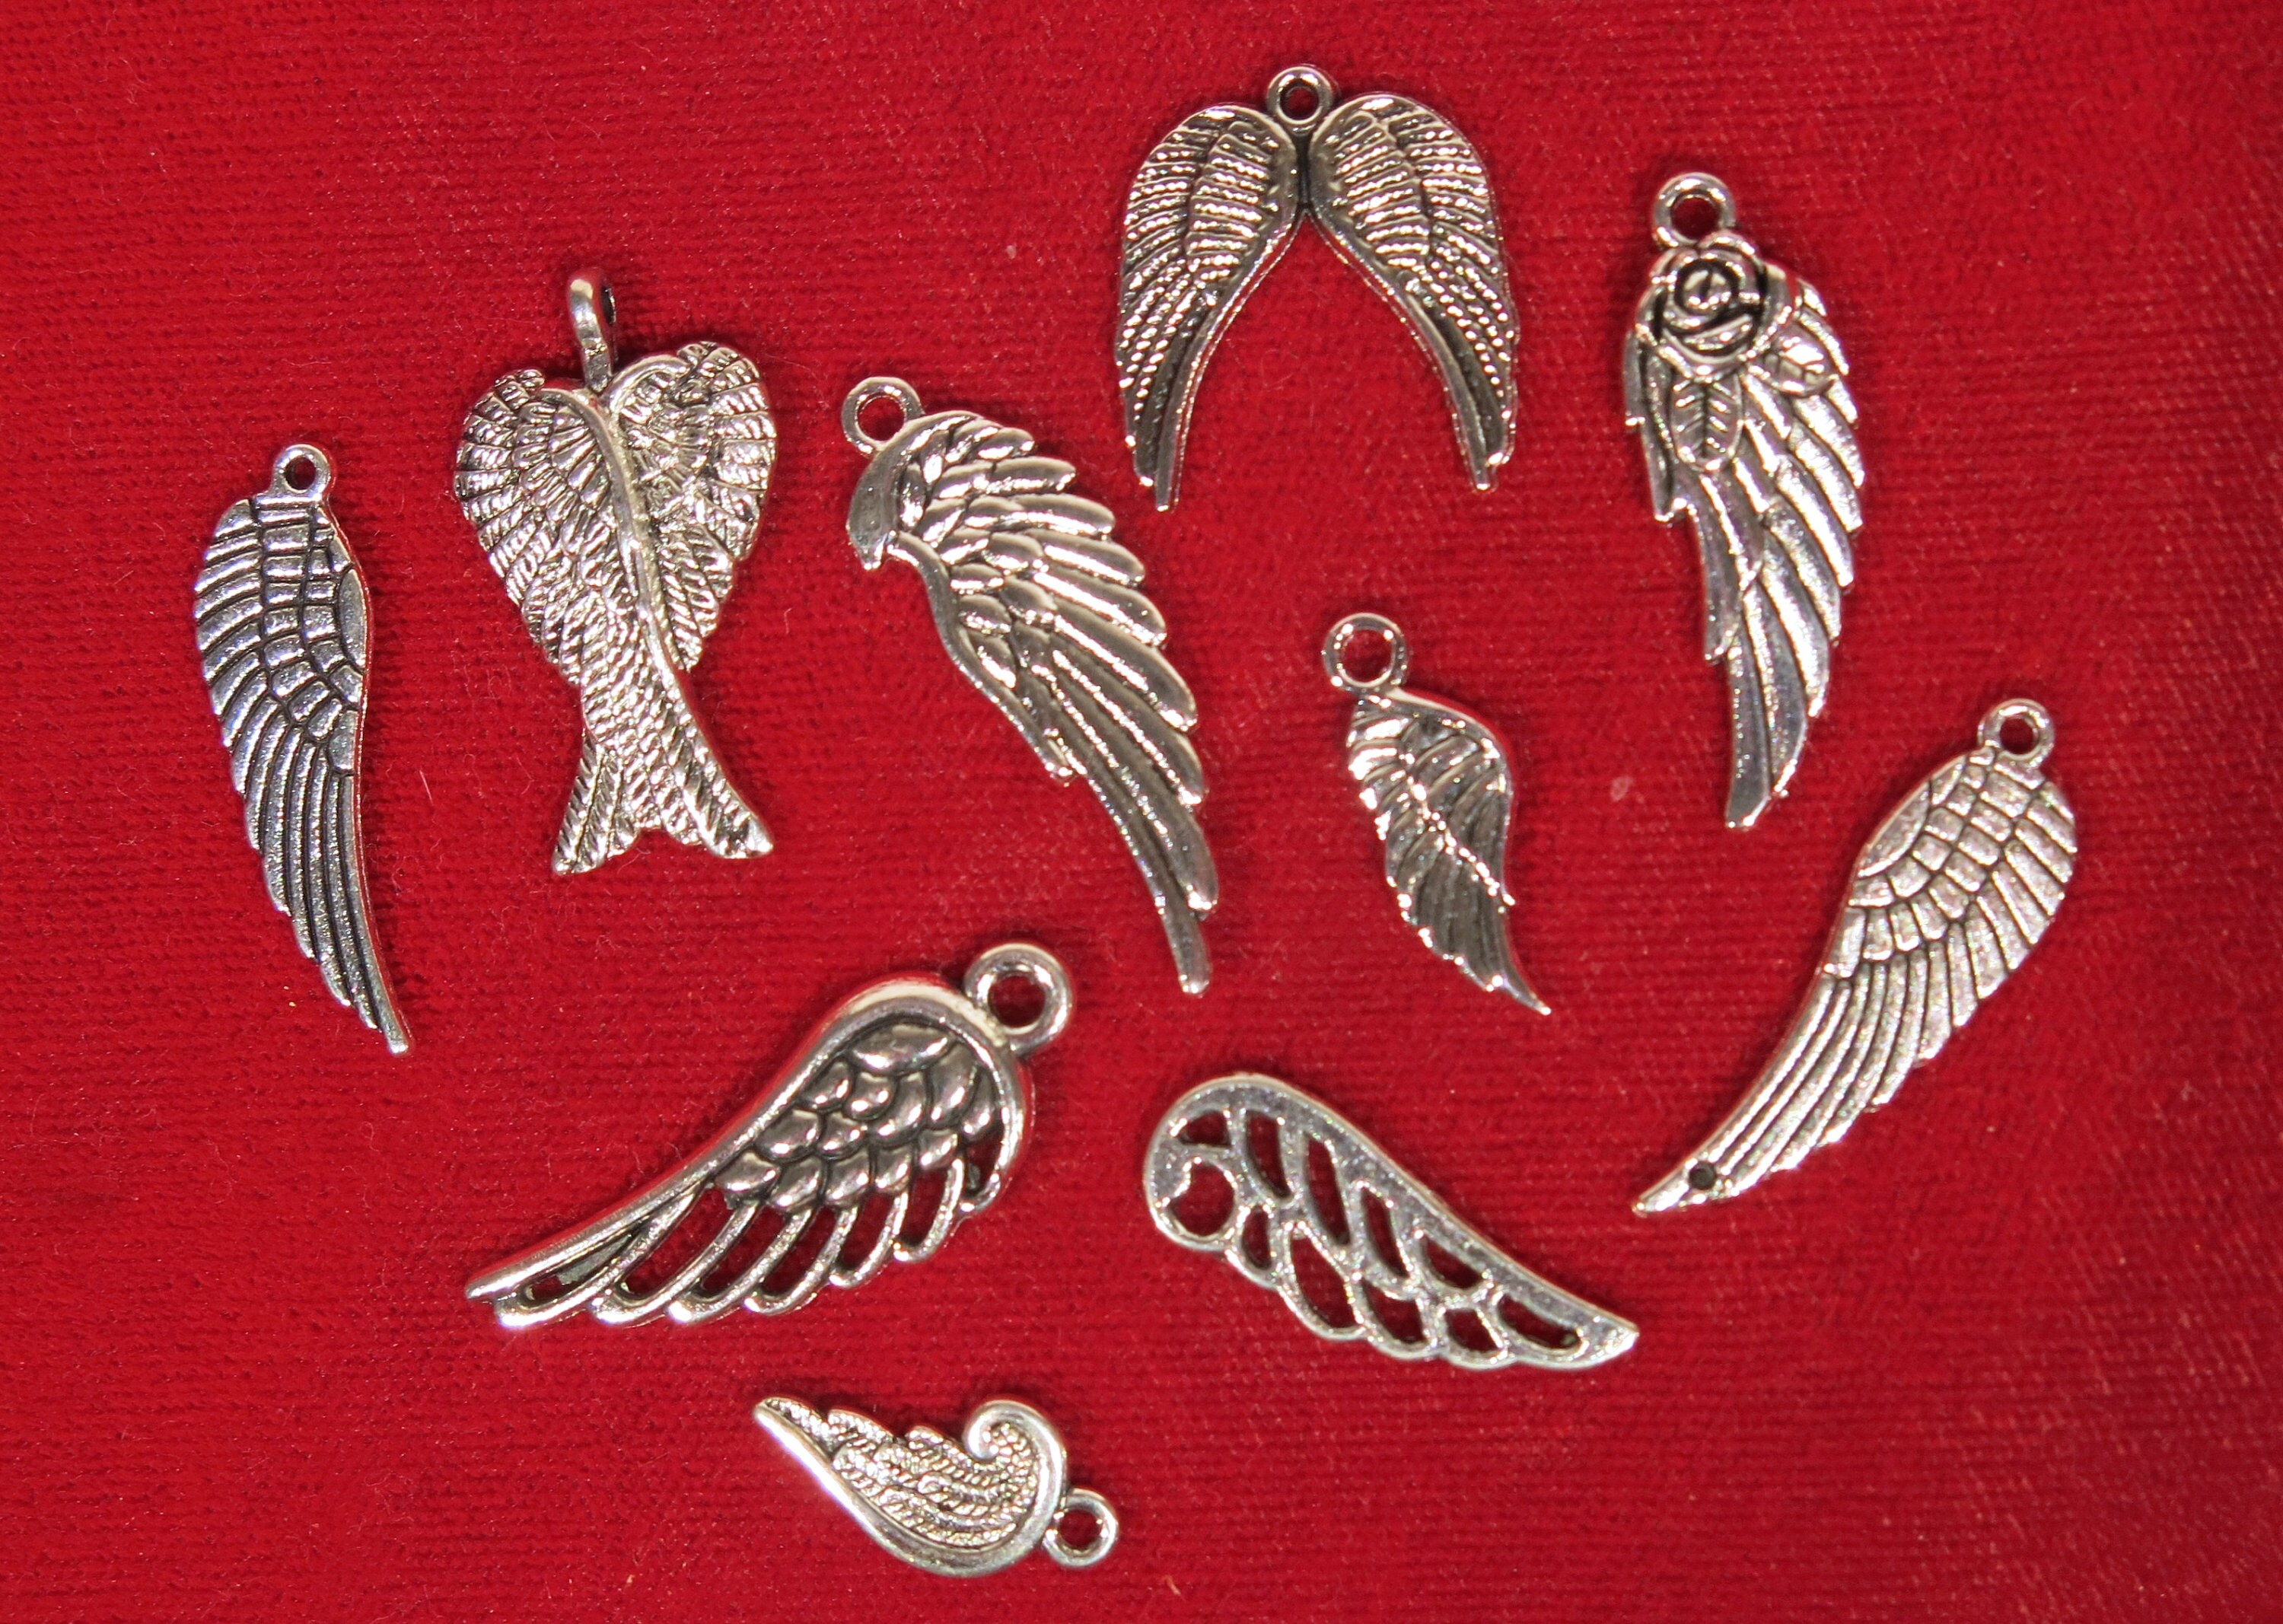  Acxico 40pcs Tibetan Silver Angel Fairy Charms